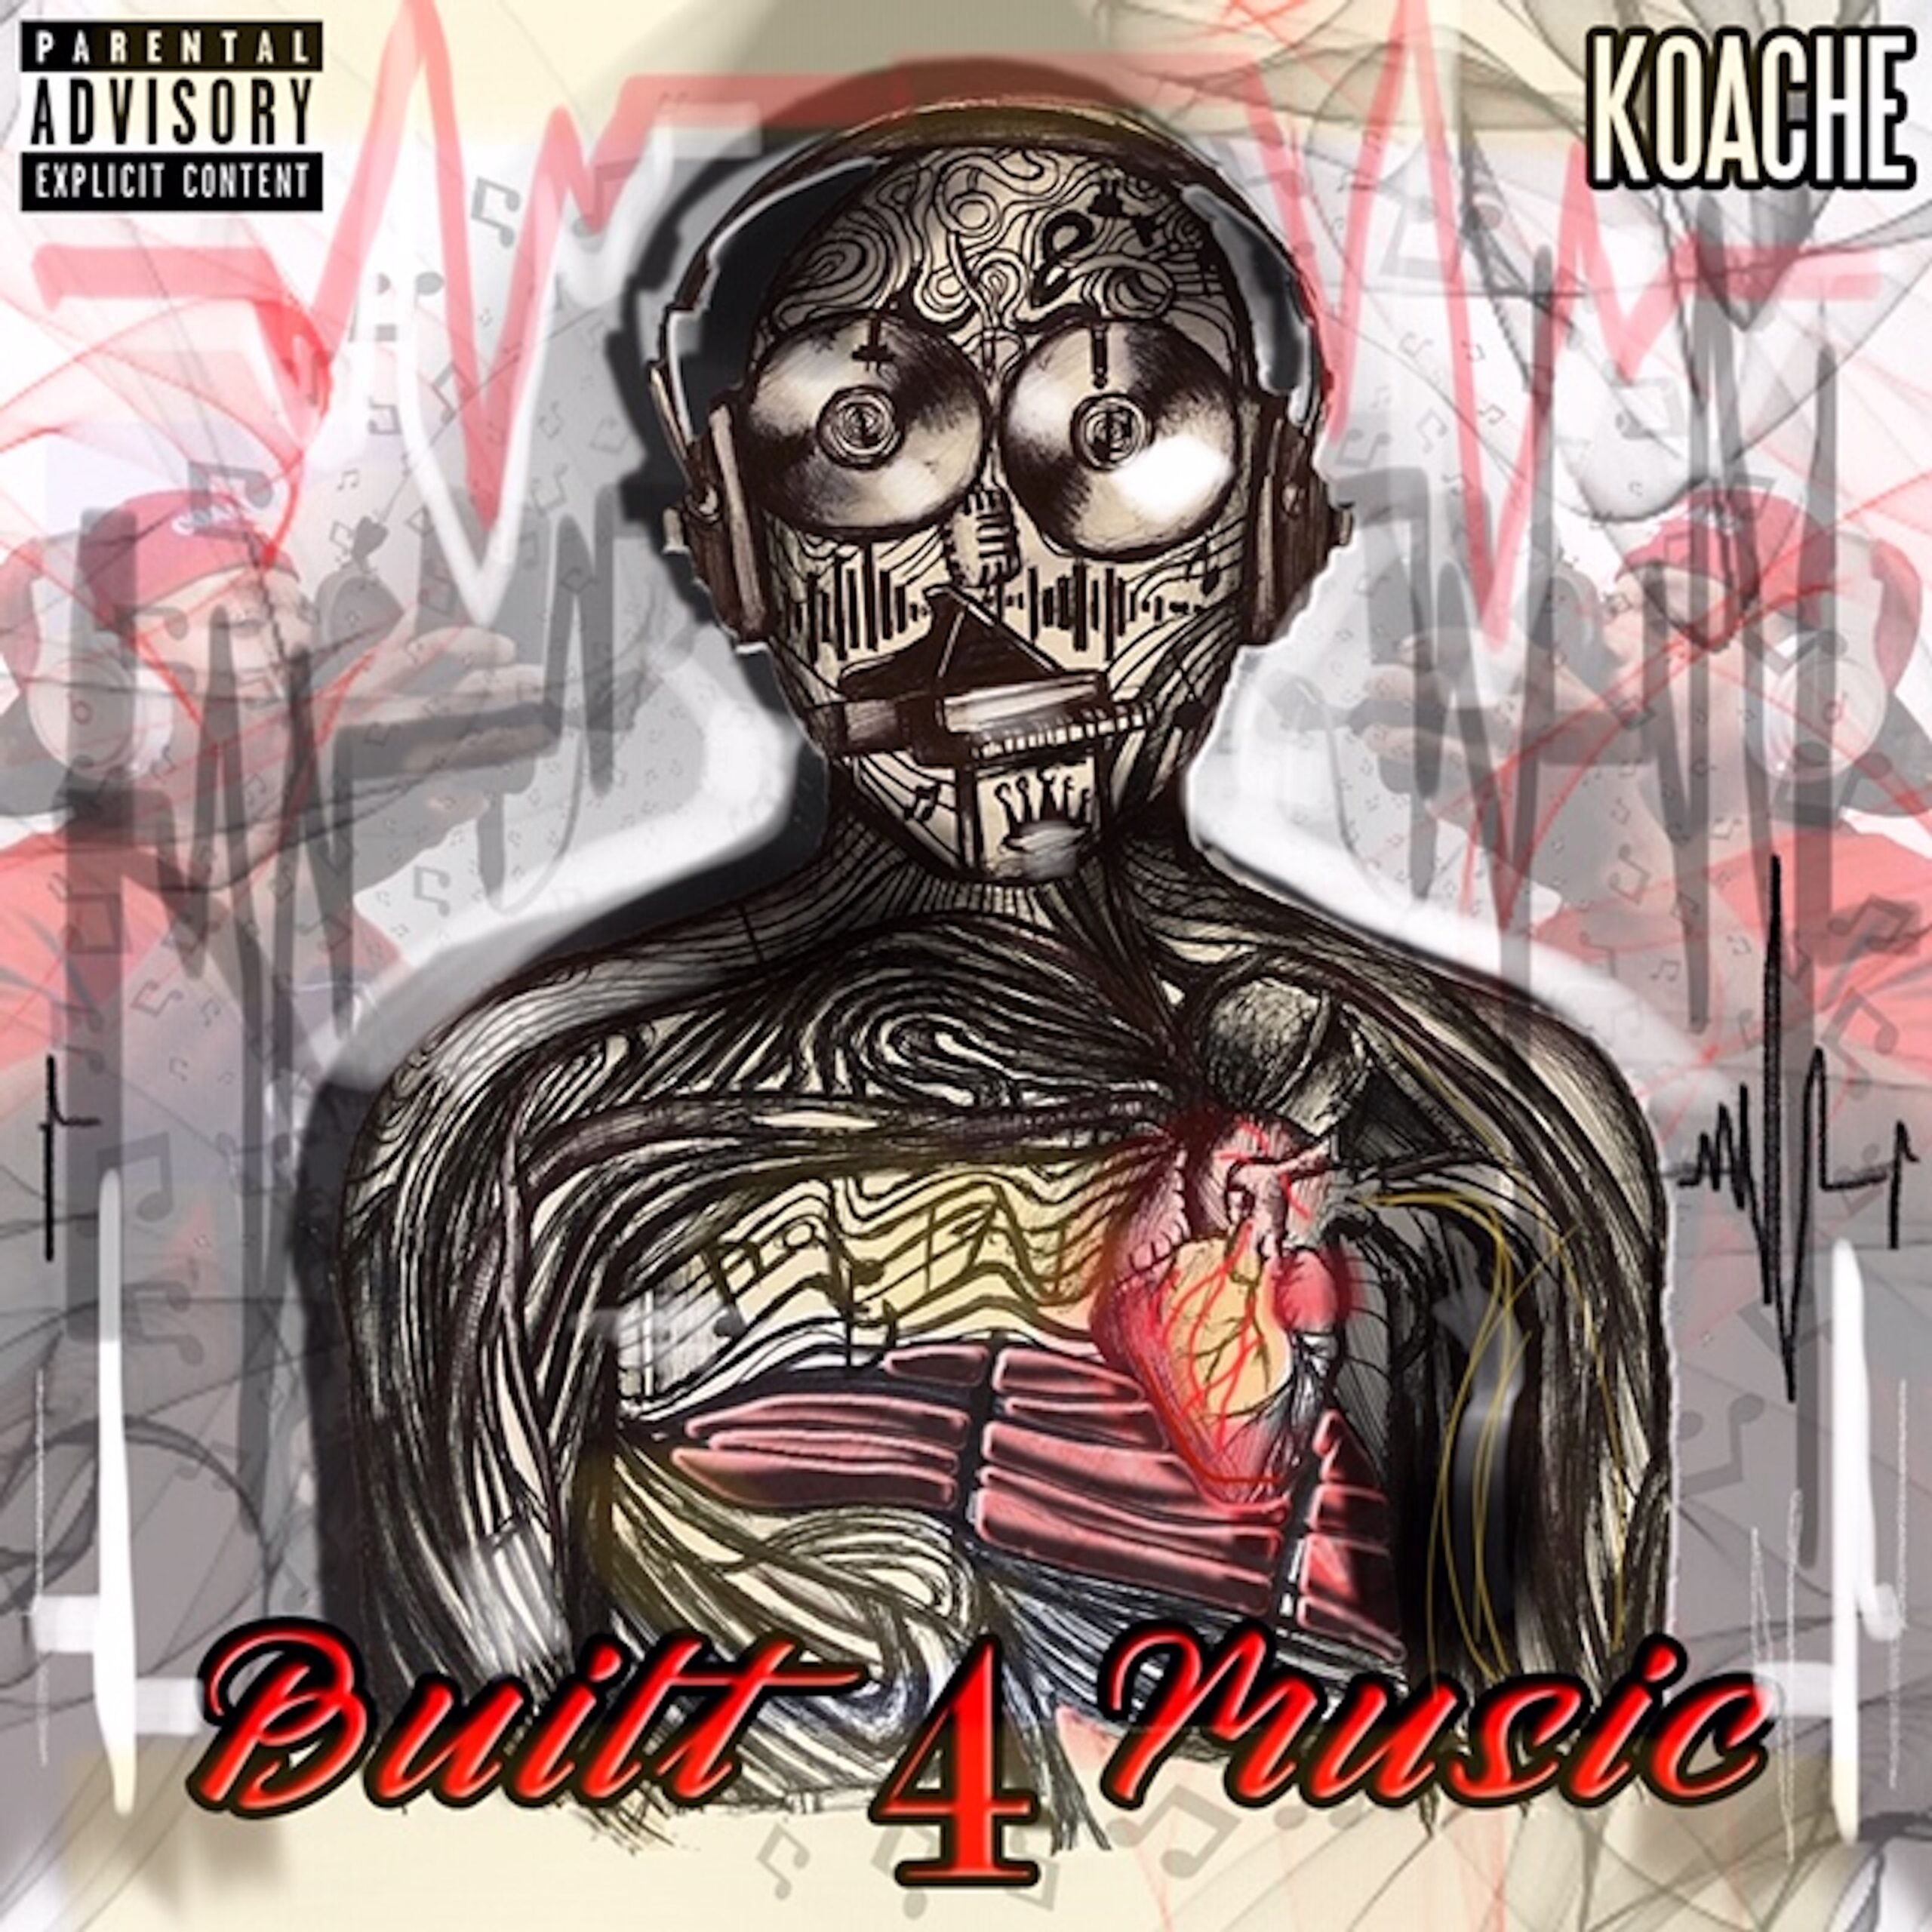 Koache Drops ‘Built 4 Music’ Album + ‘Real Life’ Video